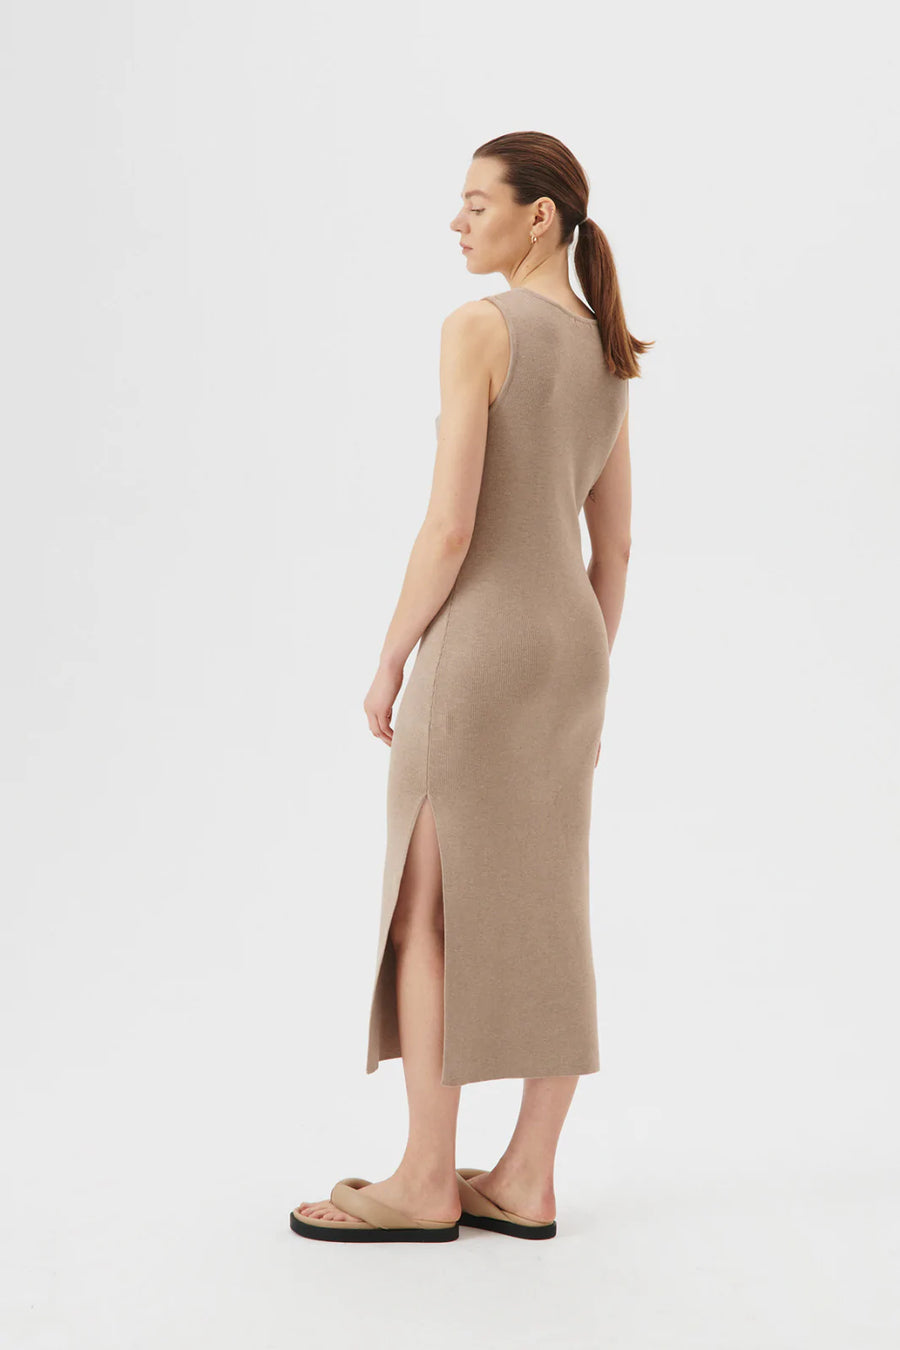 Les Goodies - Elementy Wear Sofia Beige Dress